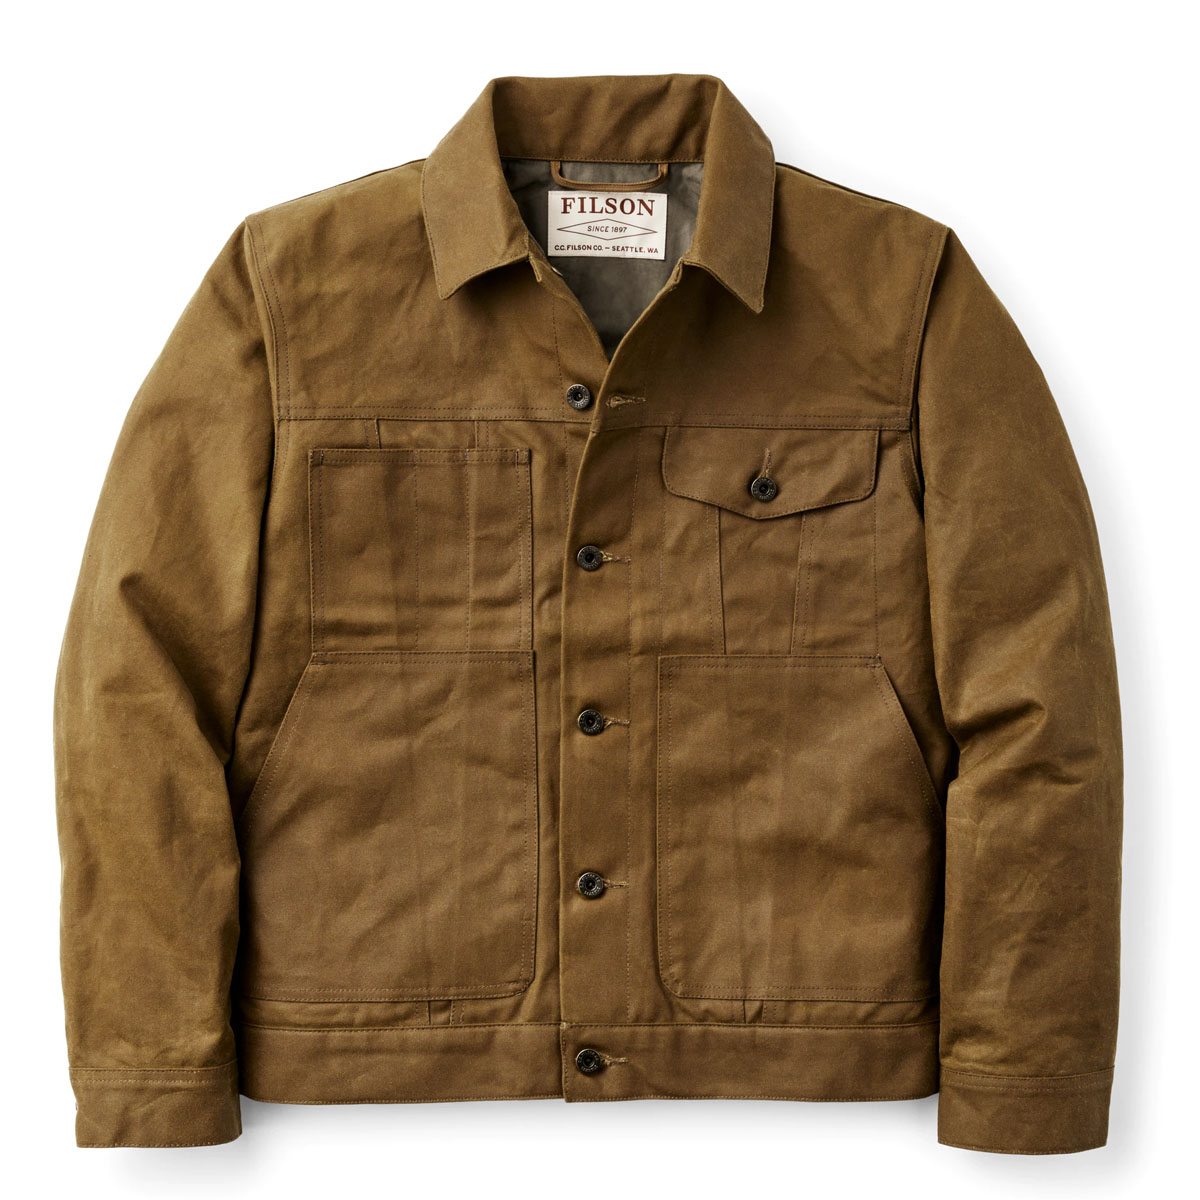 Filson Cloth Short Lined Cruiser Jacket Dark Tan, tough work jacket